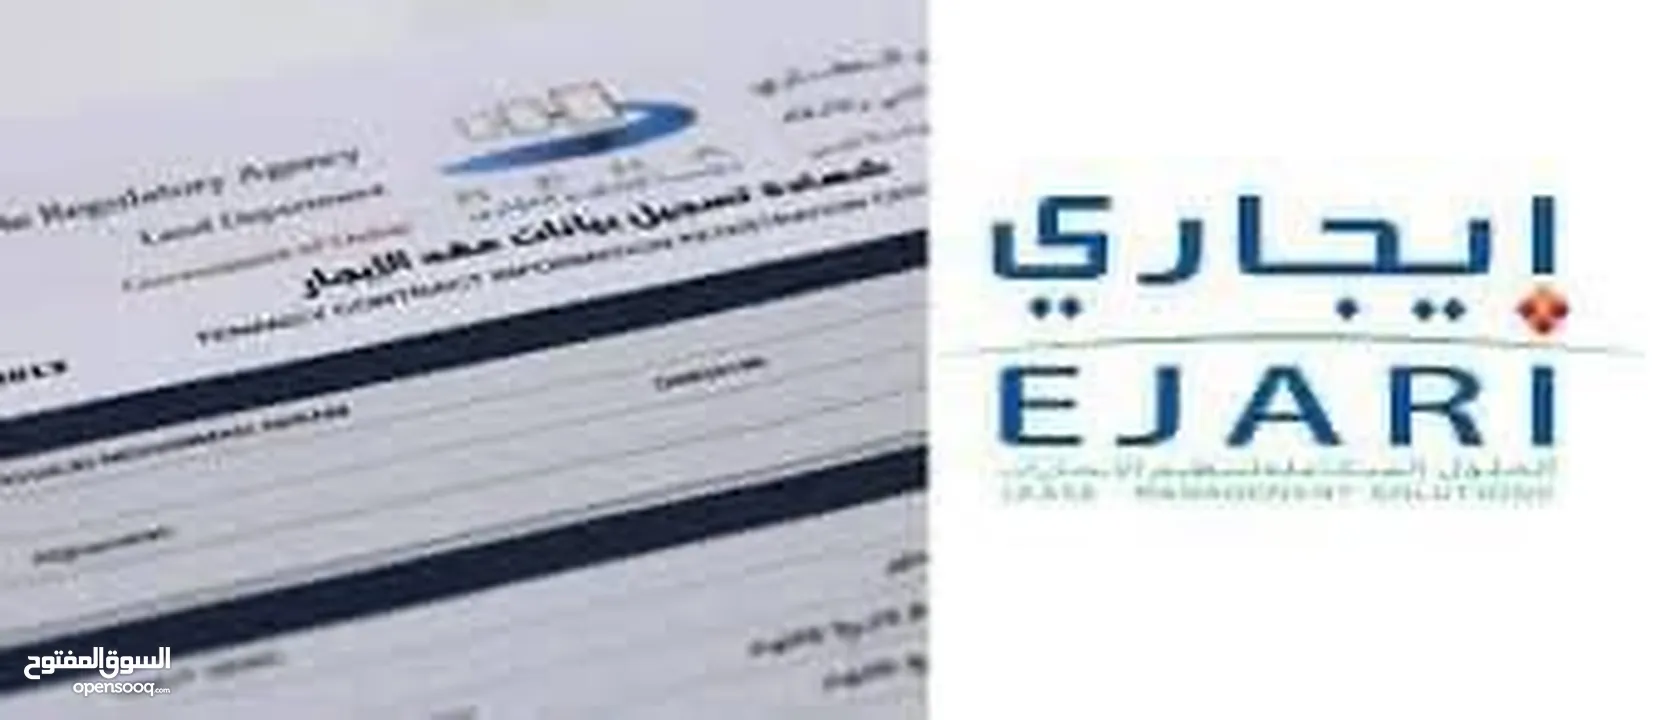 Tenancy contract Ejari for visa and bank account open